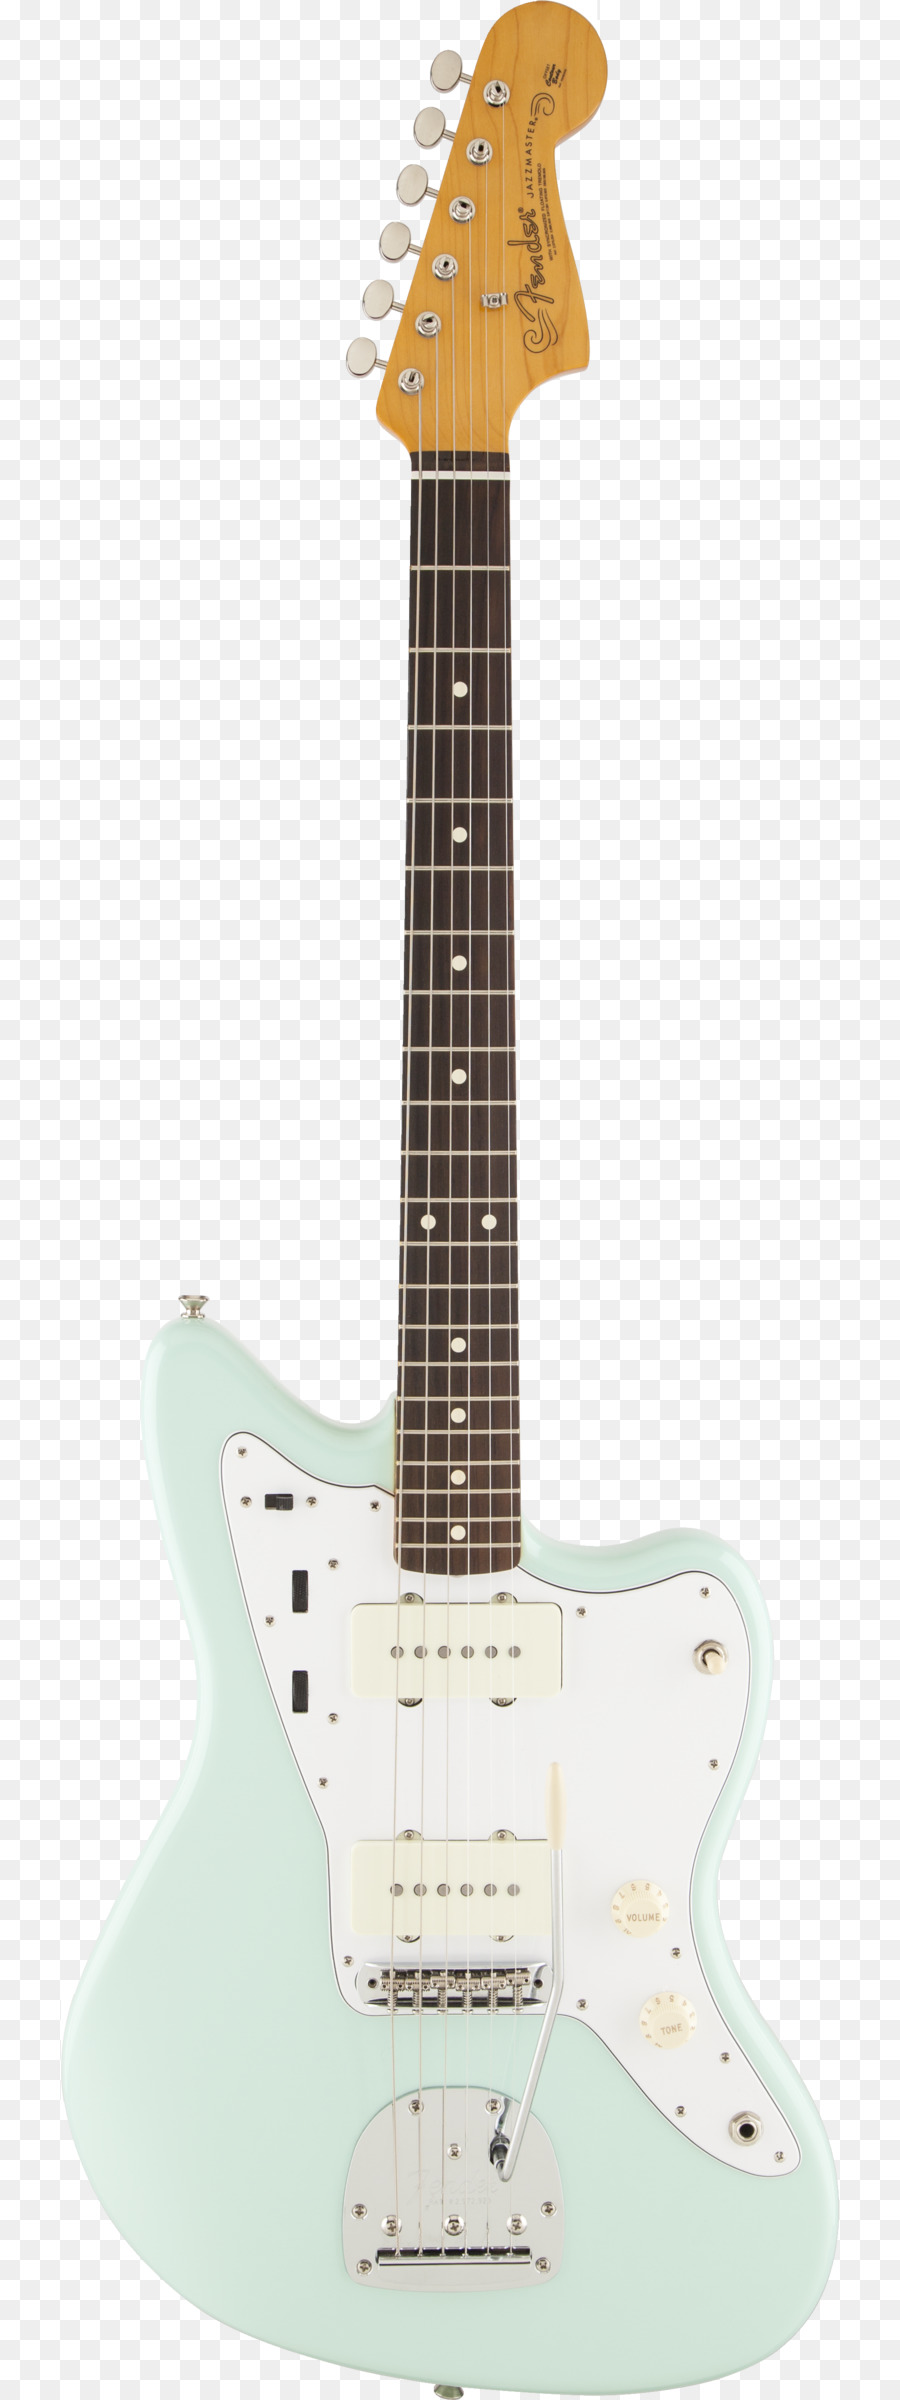 Acustica-chitarra elettrica Fender Jaguar Fender Musical Instruments Corporation - chitarra elettrica